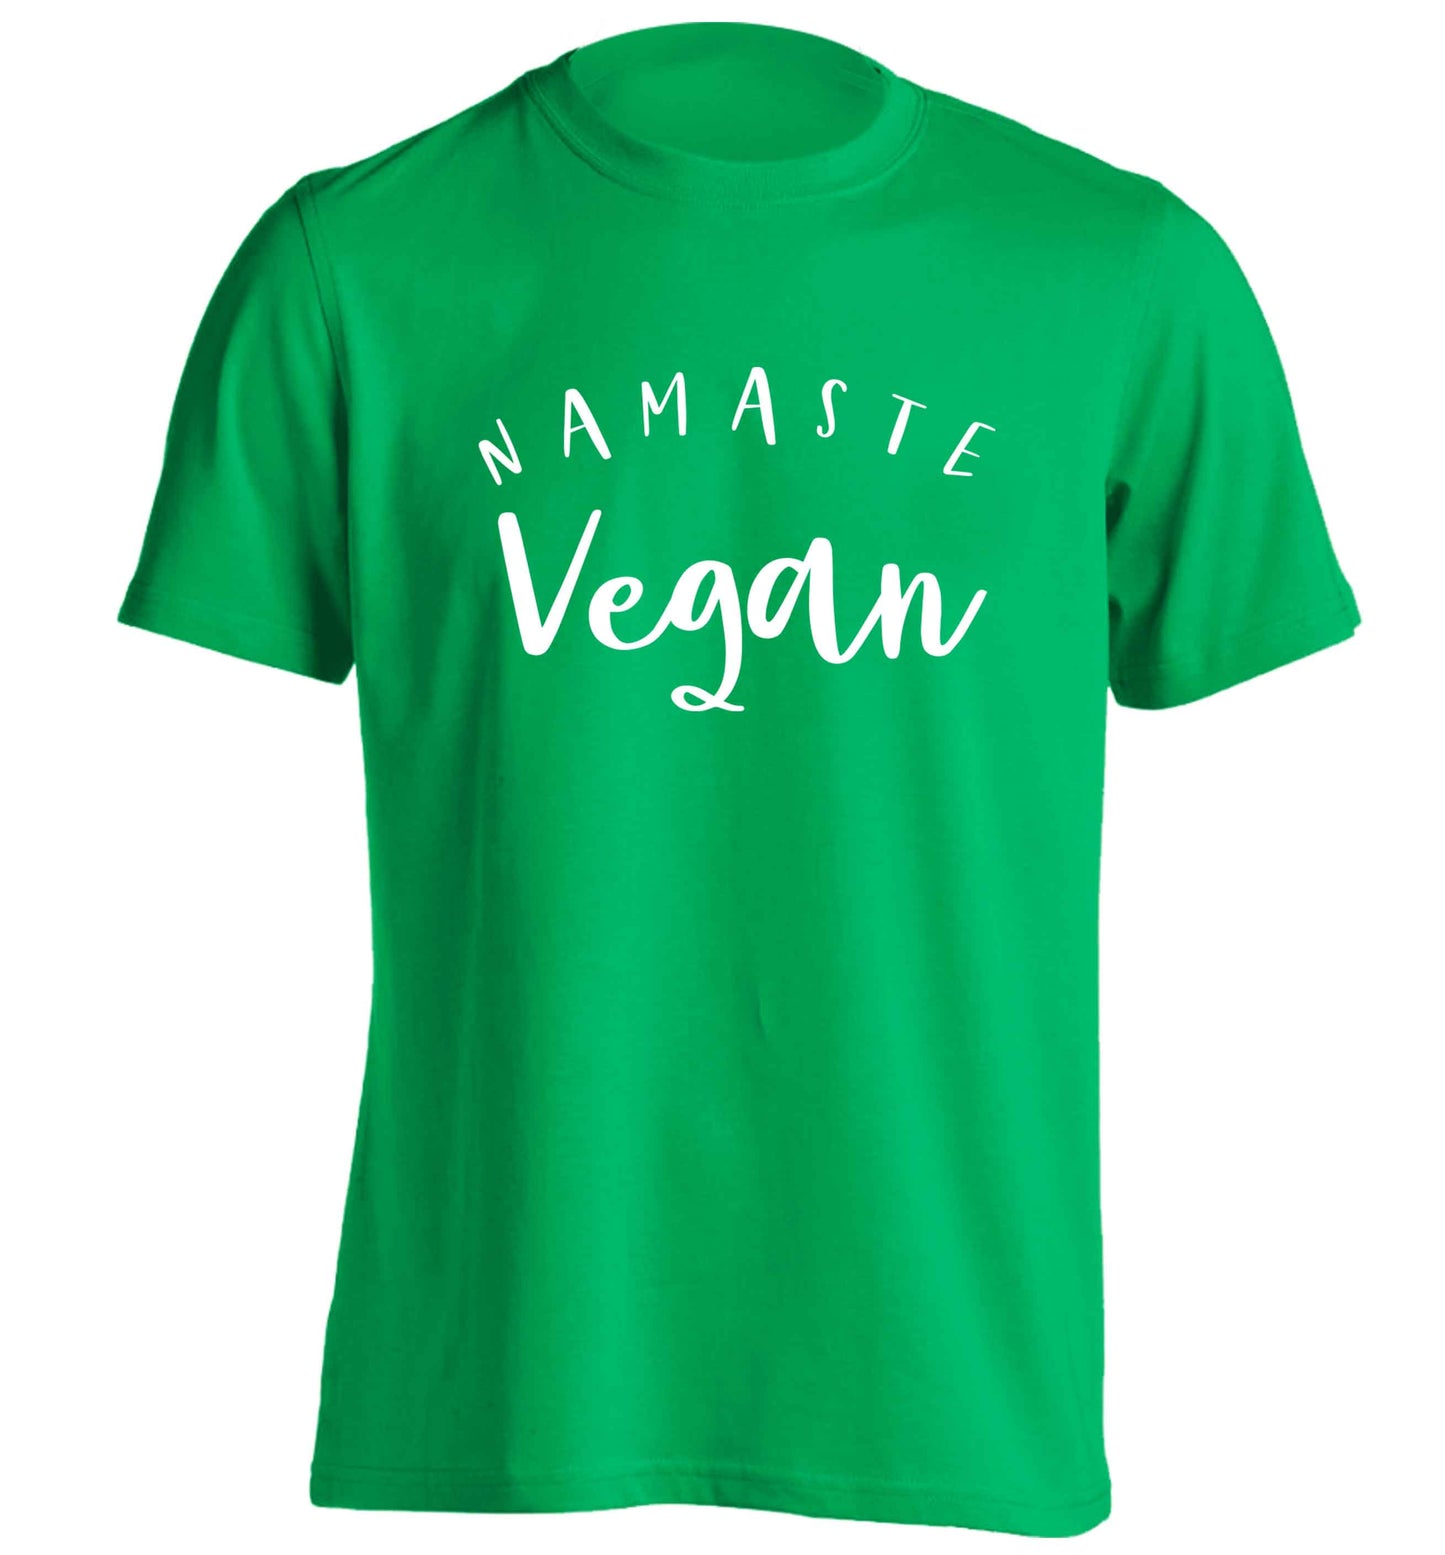 Namaste vegan adults unisex green Tshirt 2XL